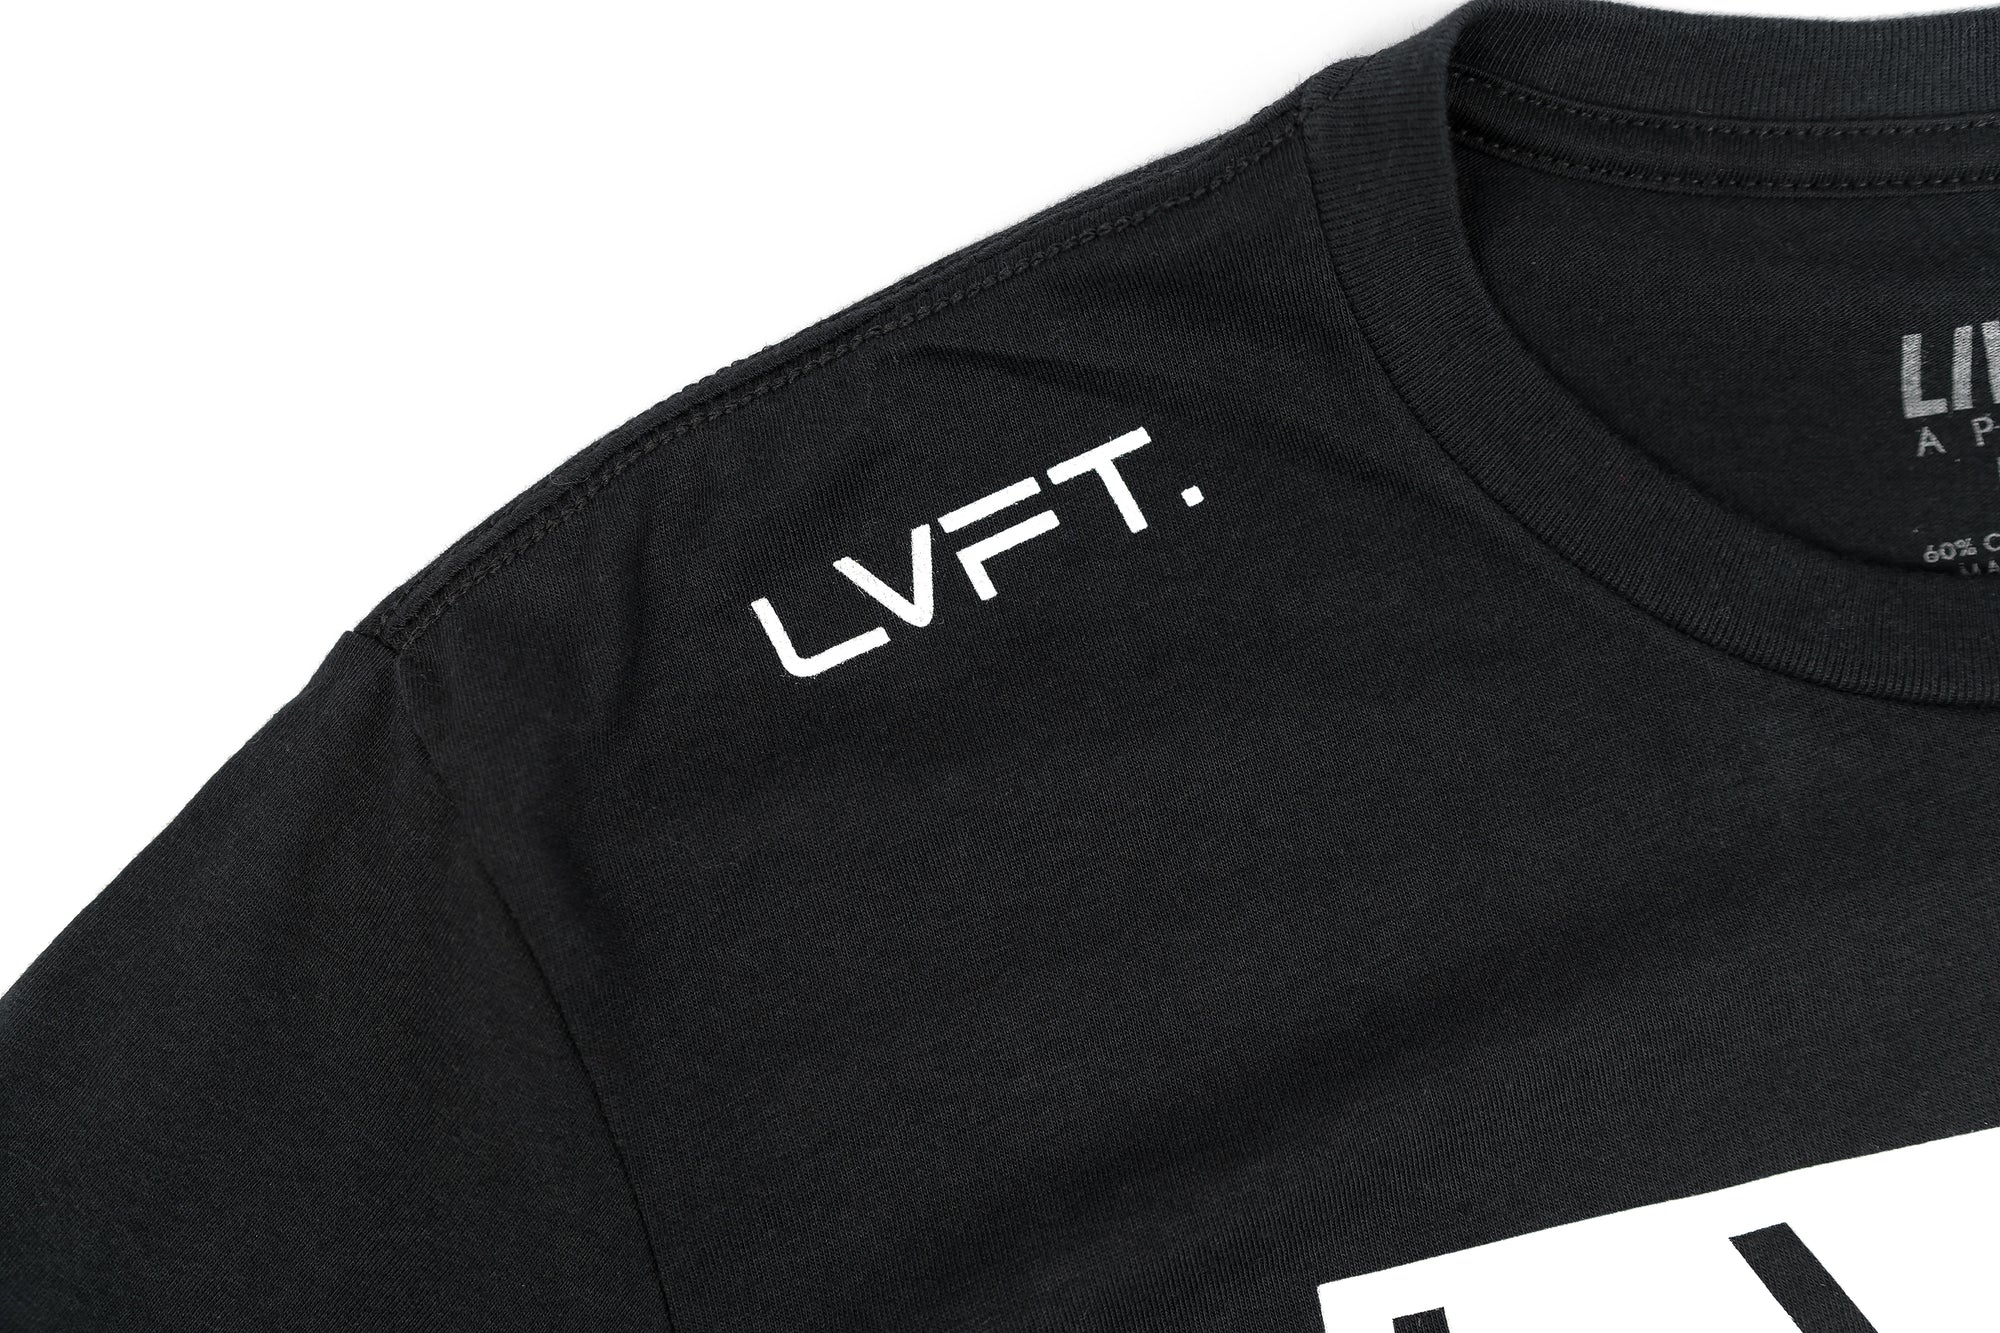 Team LVFT Tee - Black Discount 